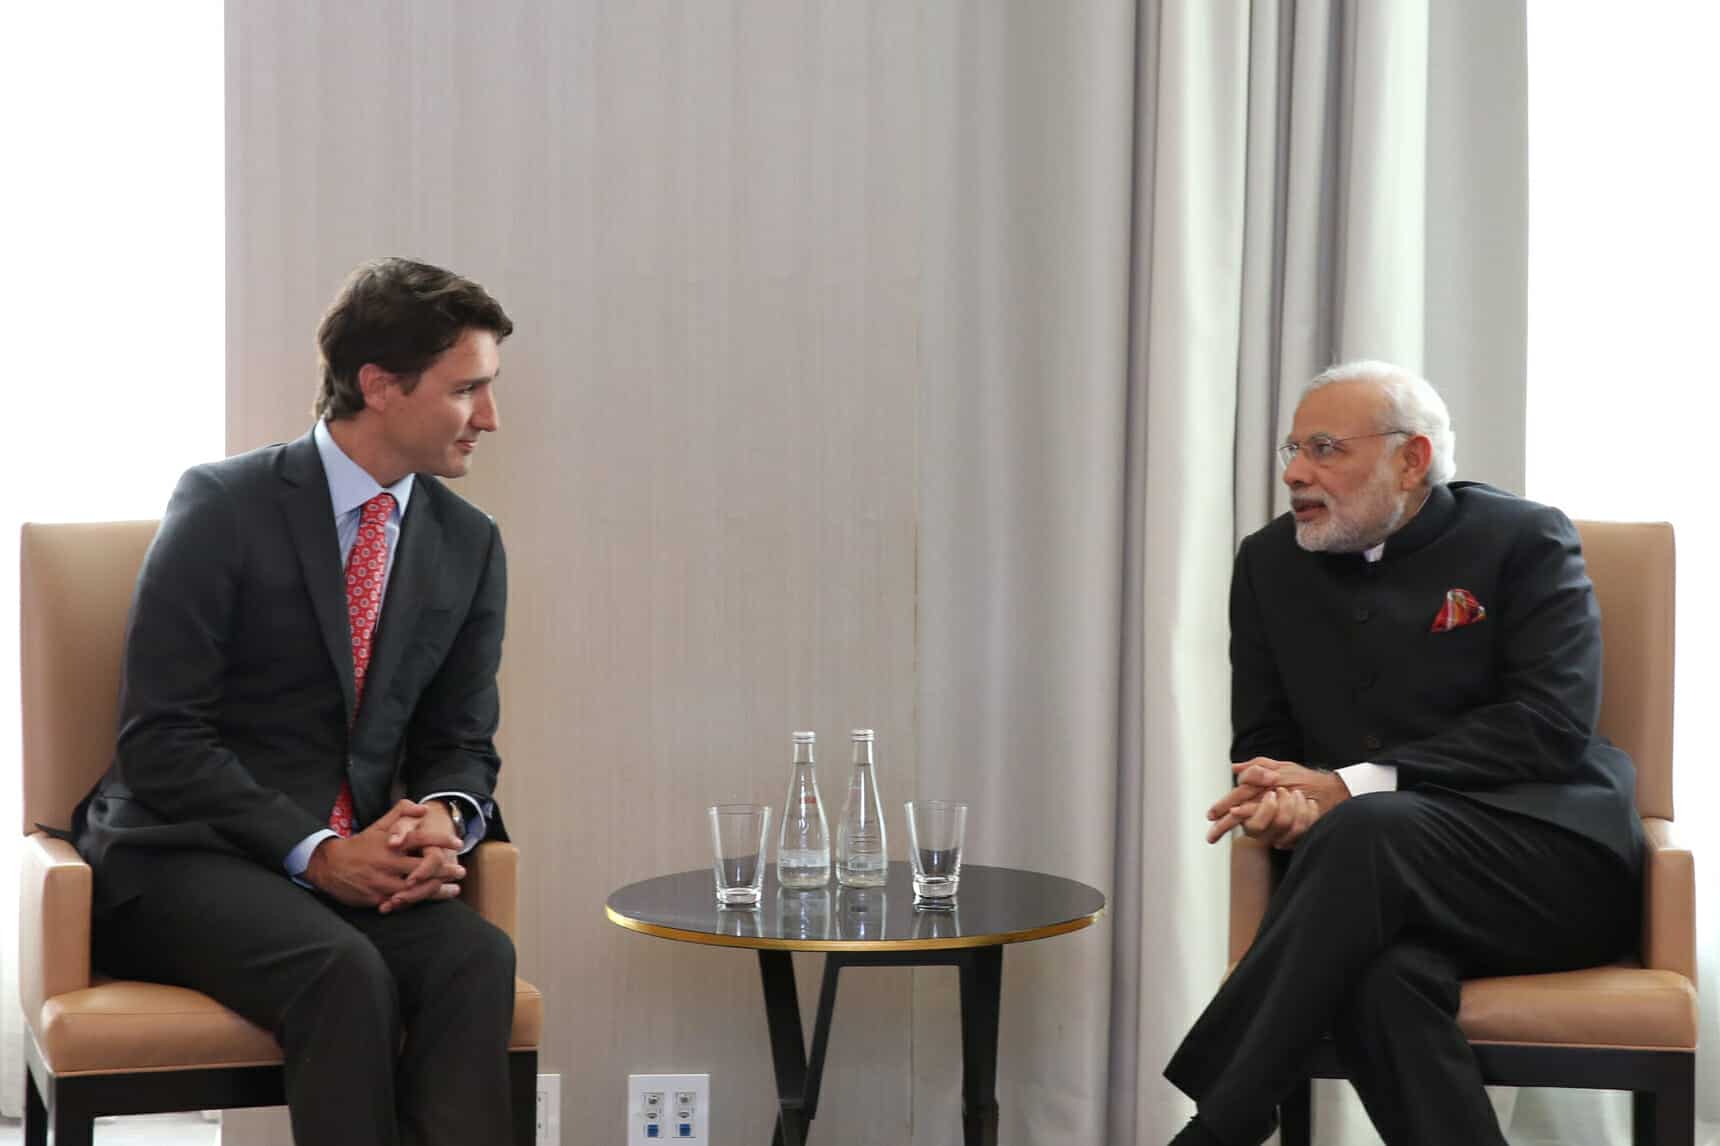 Justin Trudeau’s NSA accuses India of meddling in Canada’s interior affairs